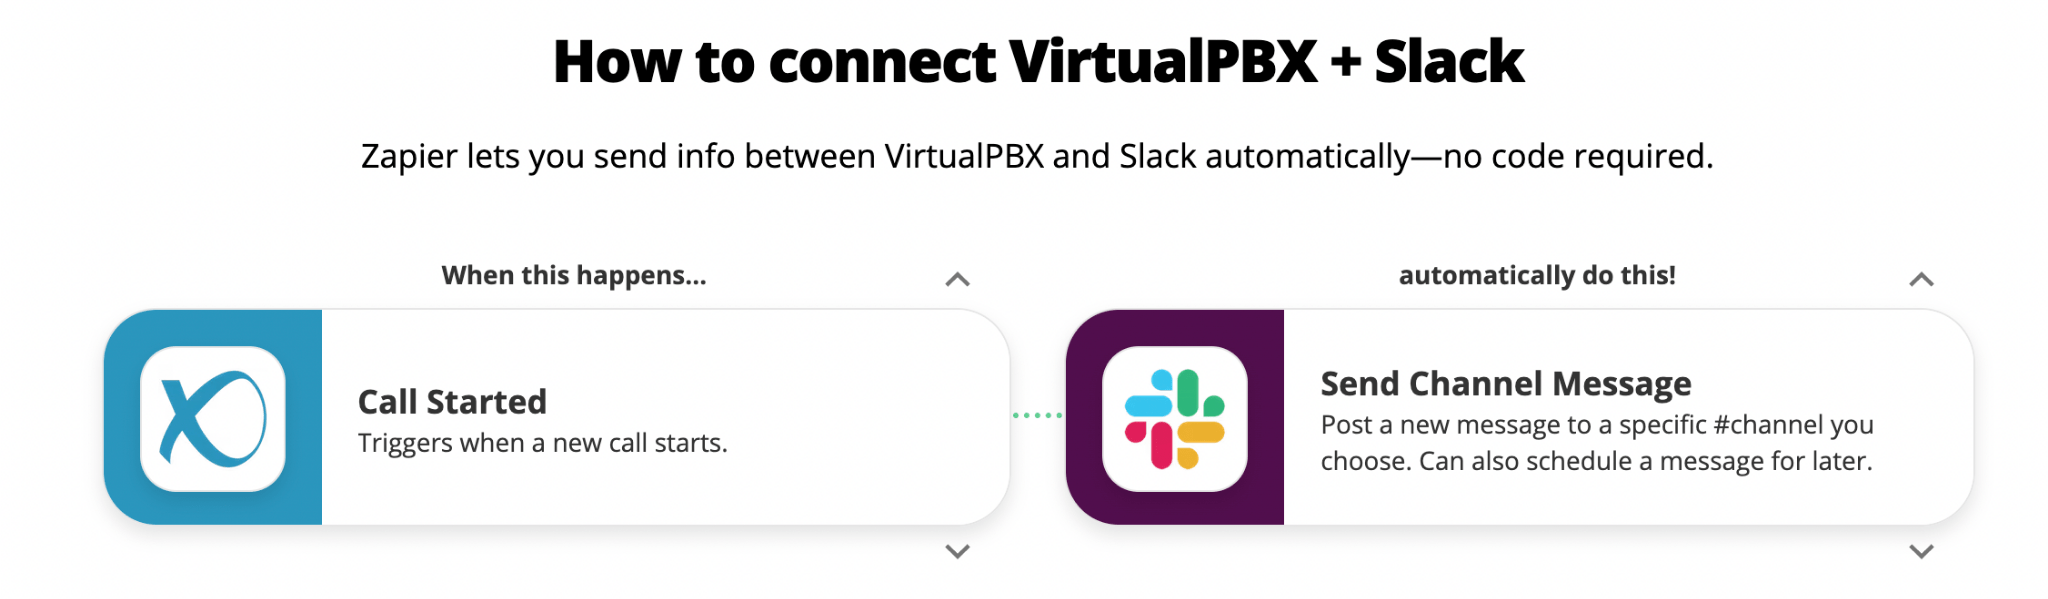 Zapier Webinar: VirtualPBX and Slack